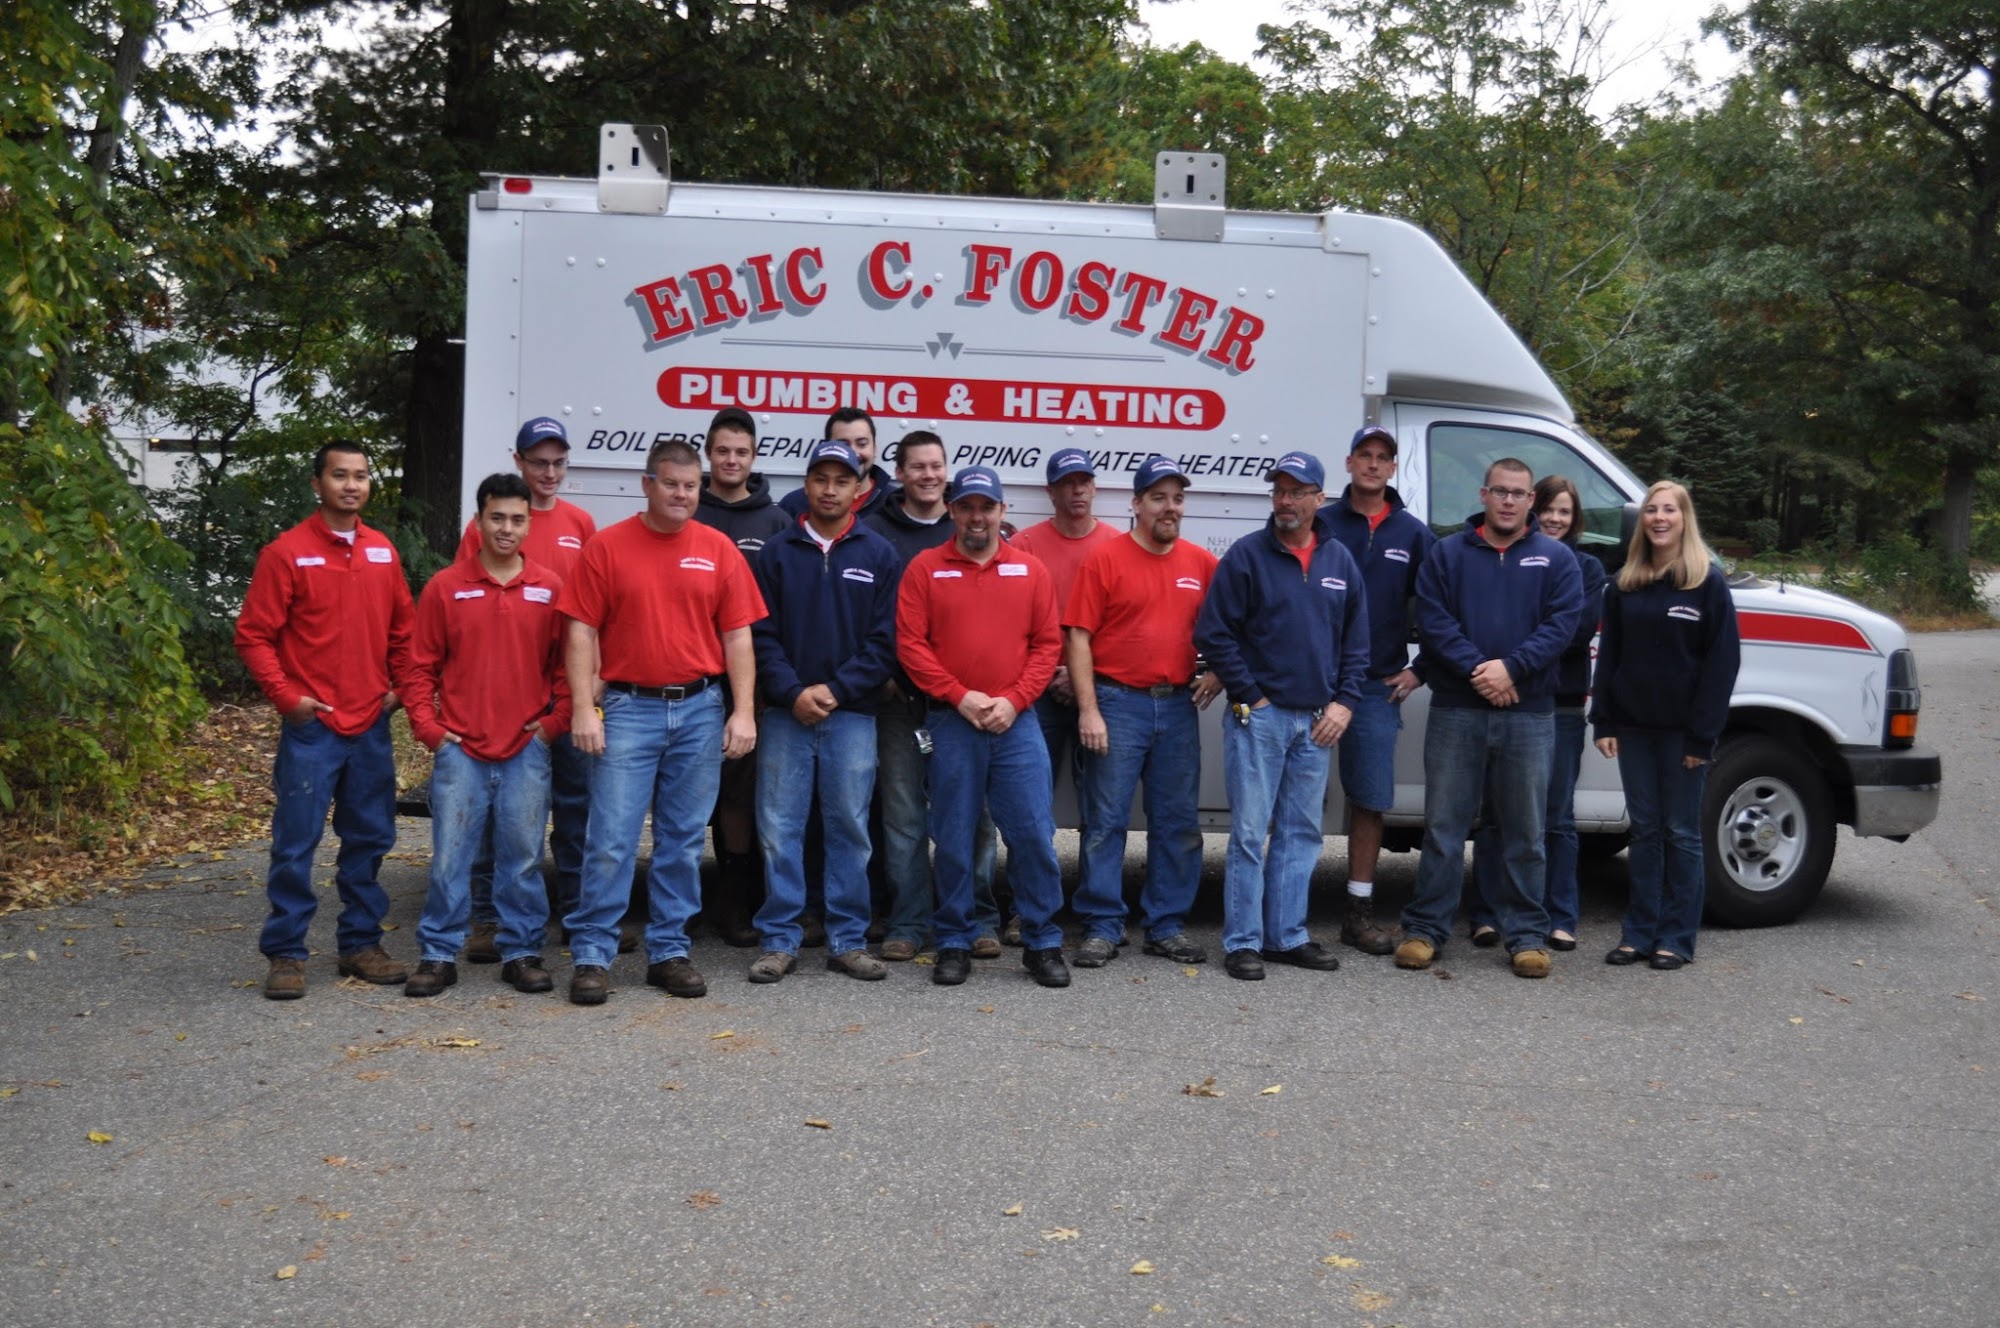 Eric C Foster Plumbing & Heating